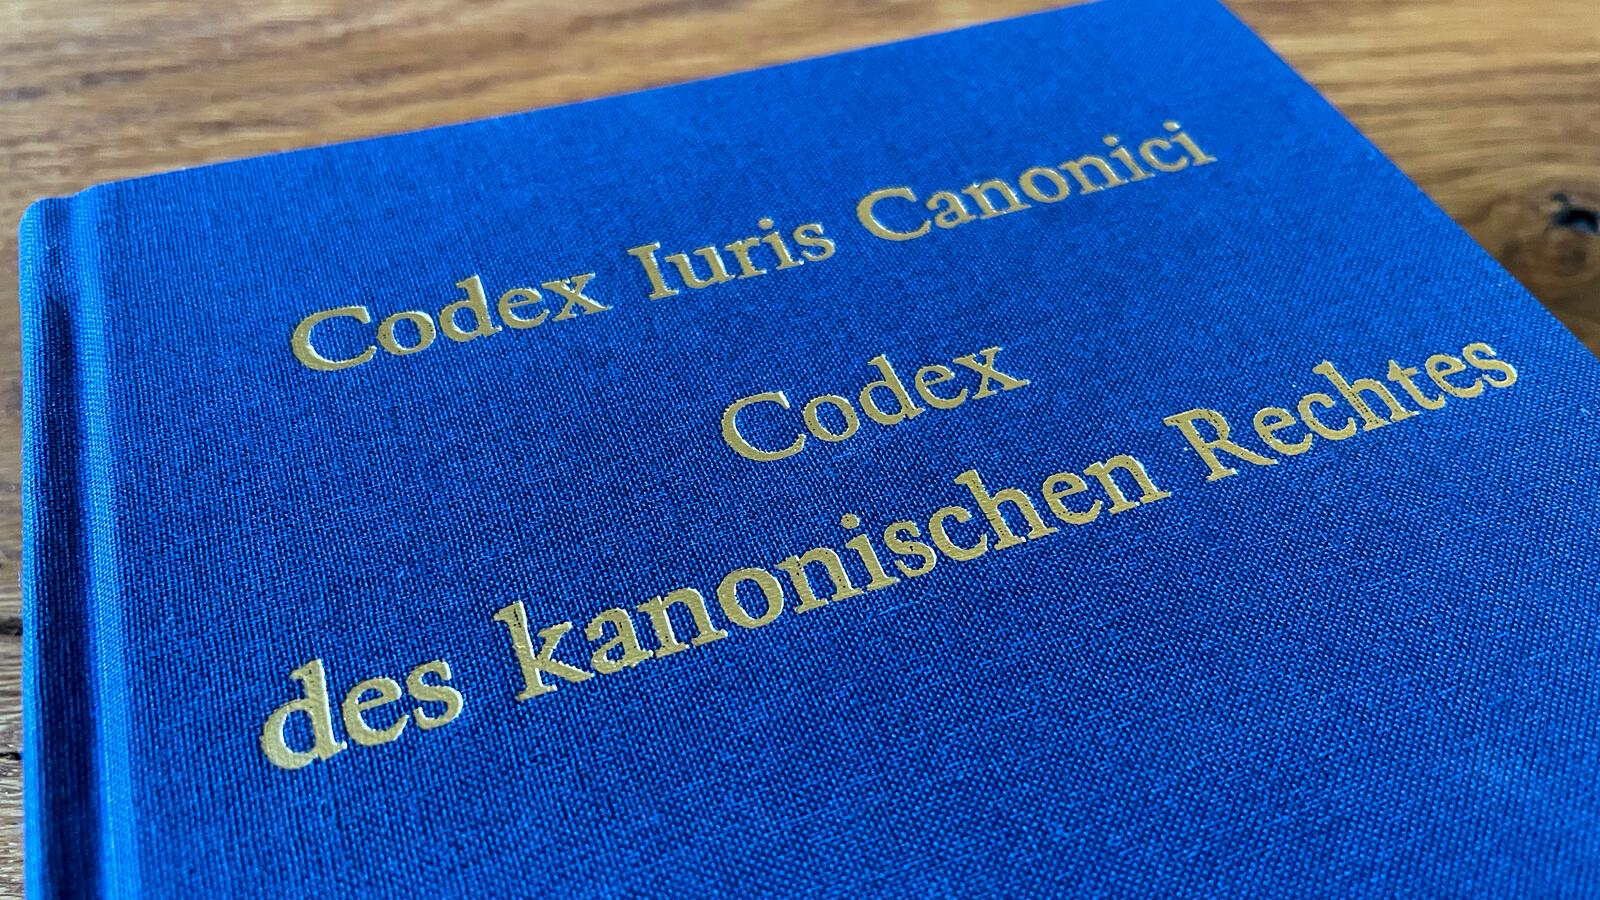 Kirchenrecht: Codex Iuris Canonici (CIC)